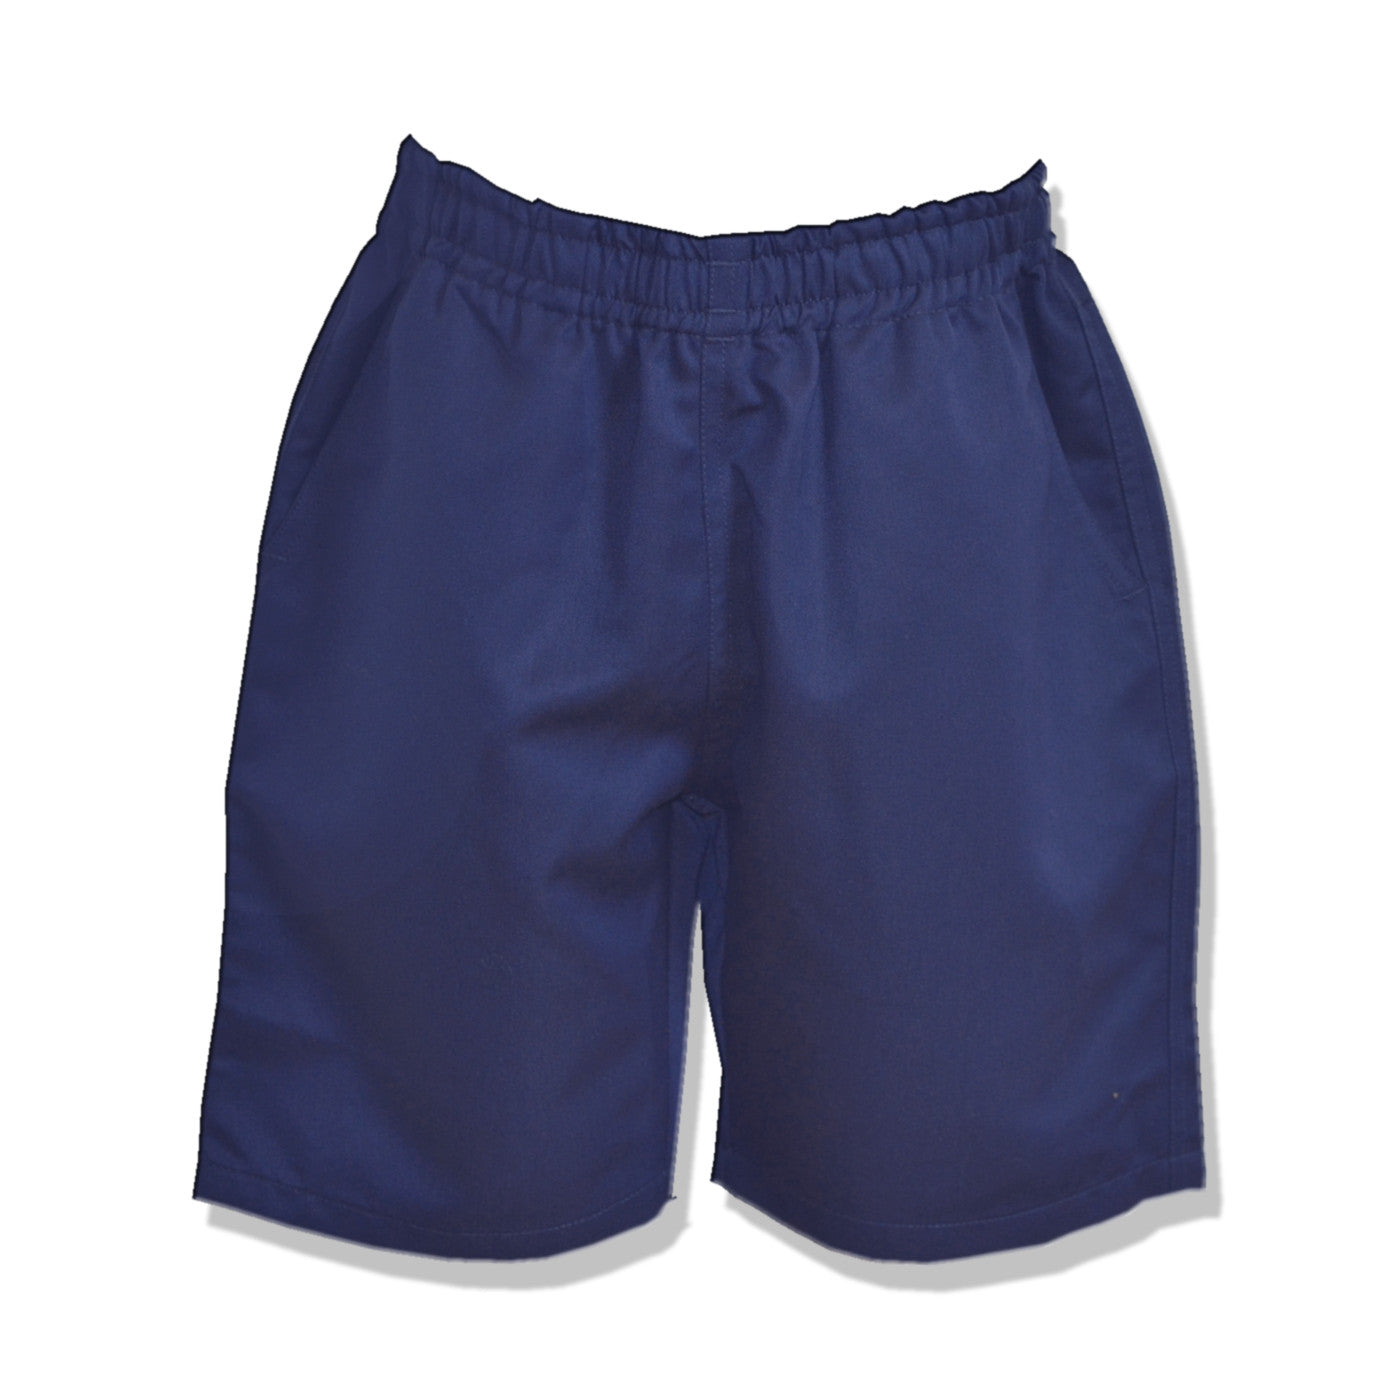 navy blue shorts for school